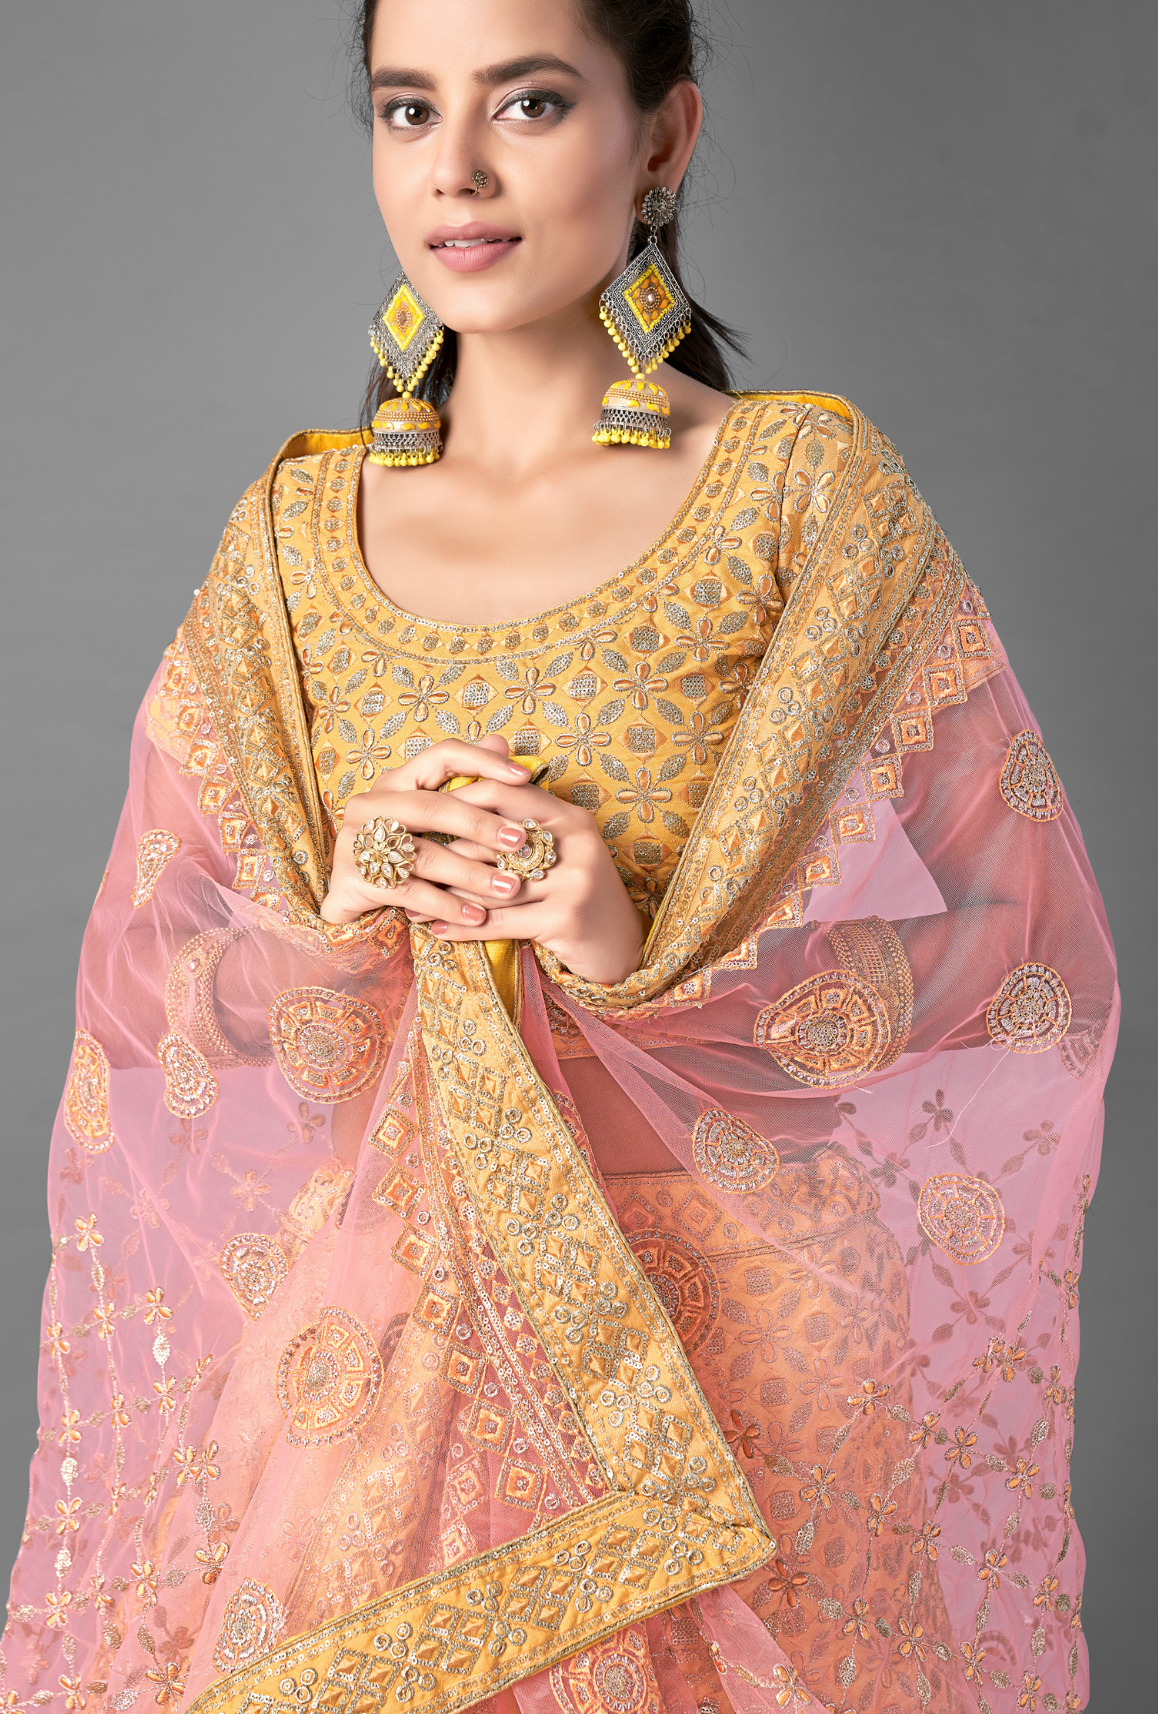 Lemon Yellow Taffeta Silk Embroidered Lehenga & Choli #Lehenga #Yellow  #TaffetaSilk #Embroidered #Wedding #Festive #indiandesignerwear  #indianweddingdress #indi…